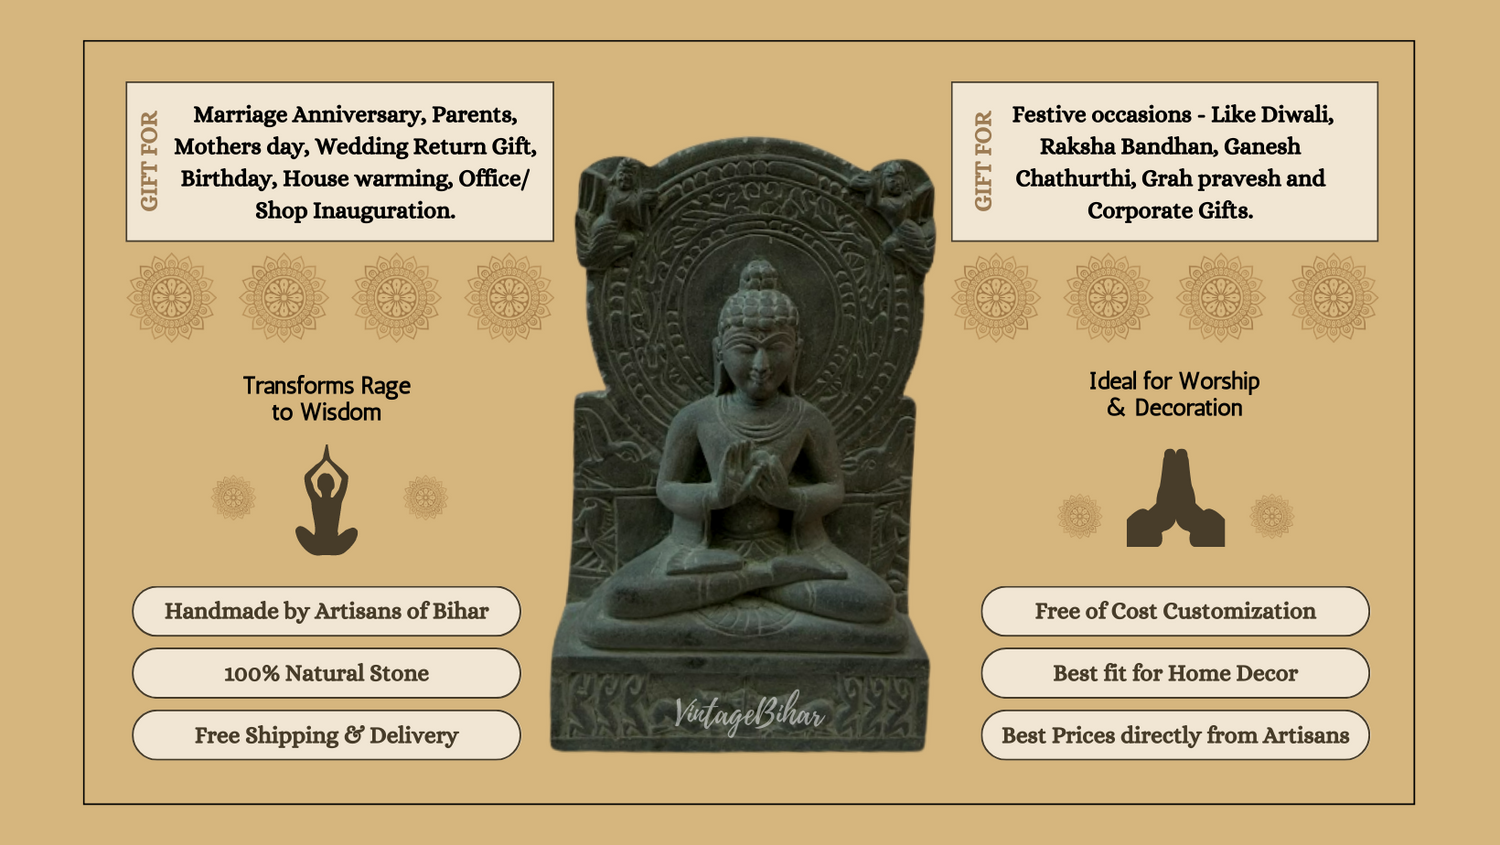 Goranshi Handicrafts Wooden Ganesh ji murti | God Idol / Murti / Figurines  / Idol is Best Decor Gift for Home, Wedding Gift, Birthday, House Warming,  Office / Shop Inauguration, Festive Occasions : Amazon.ca: Home